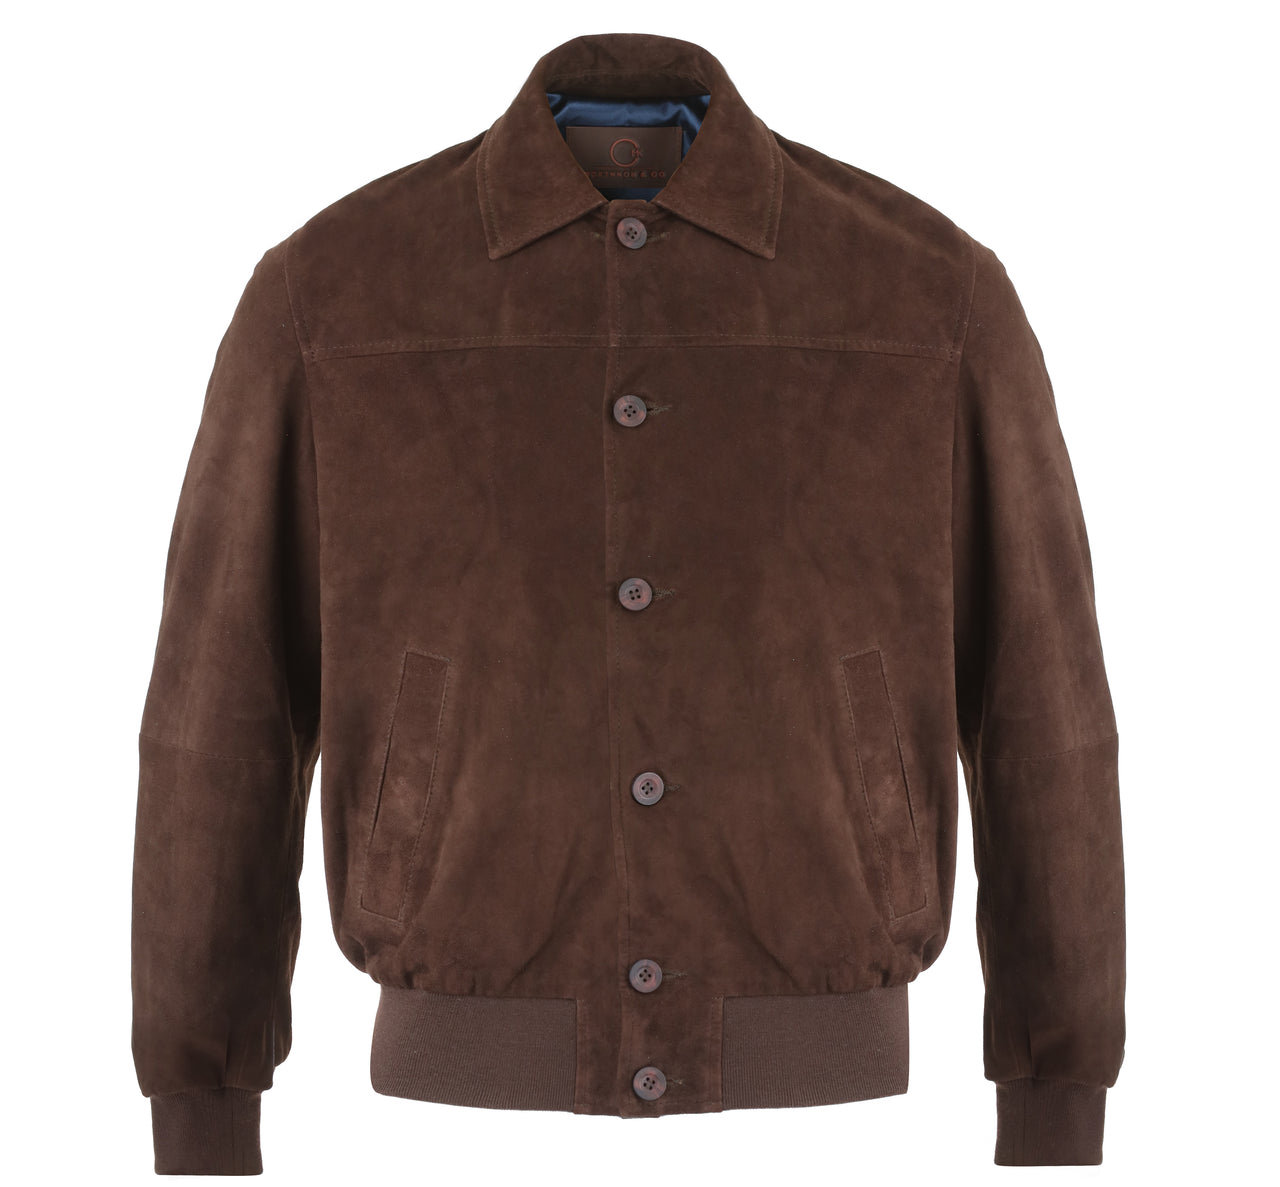 MCKINNON Suede Leather Jacket CHOCOLATE